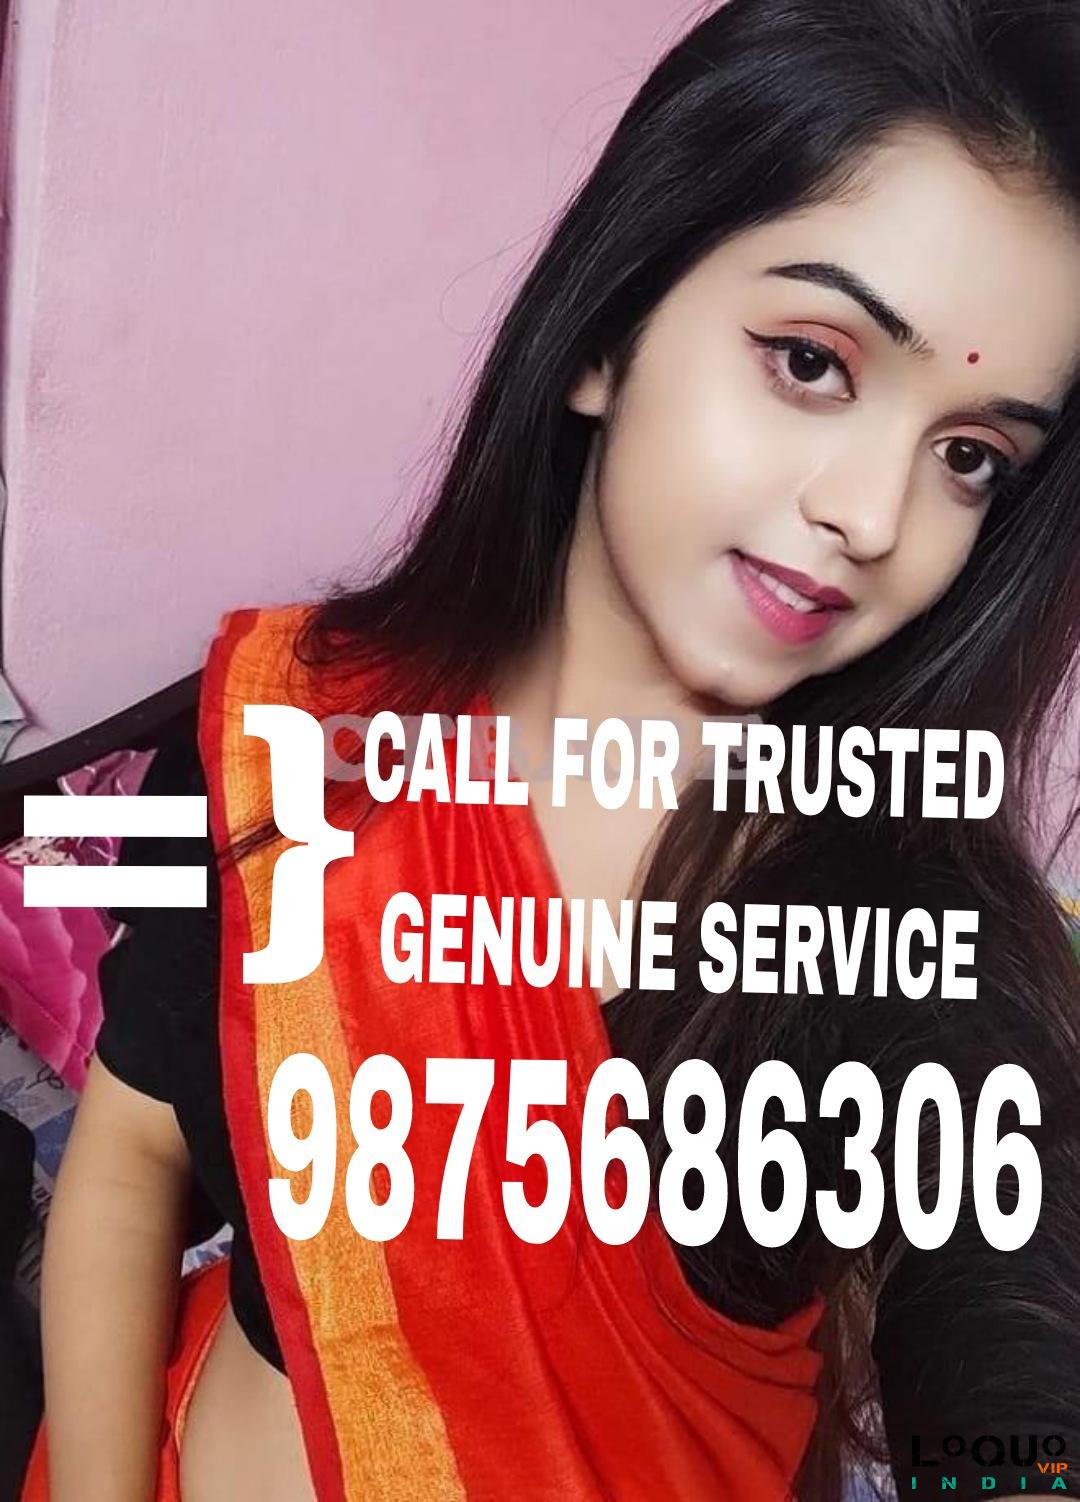 Call Girls Uttarakhand: RUDRAPUR ❤CALL GIRL 98756*86306 ❤CALL GIRLS IN ESCORT SERVICE❤